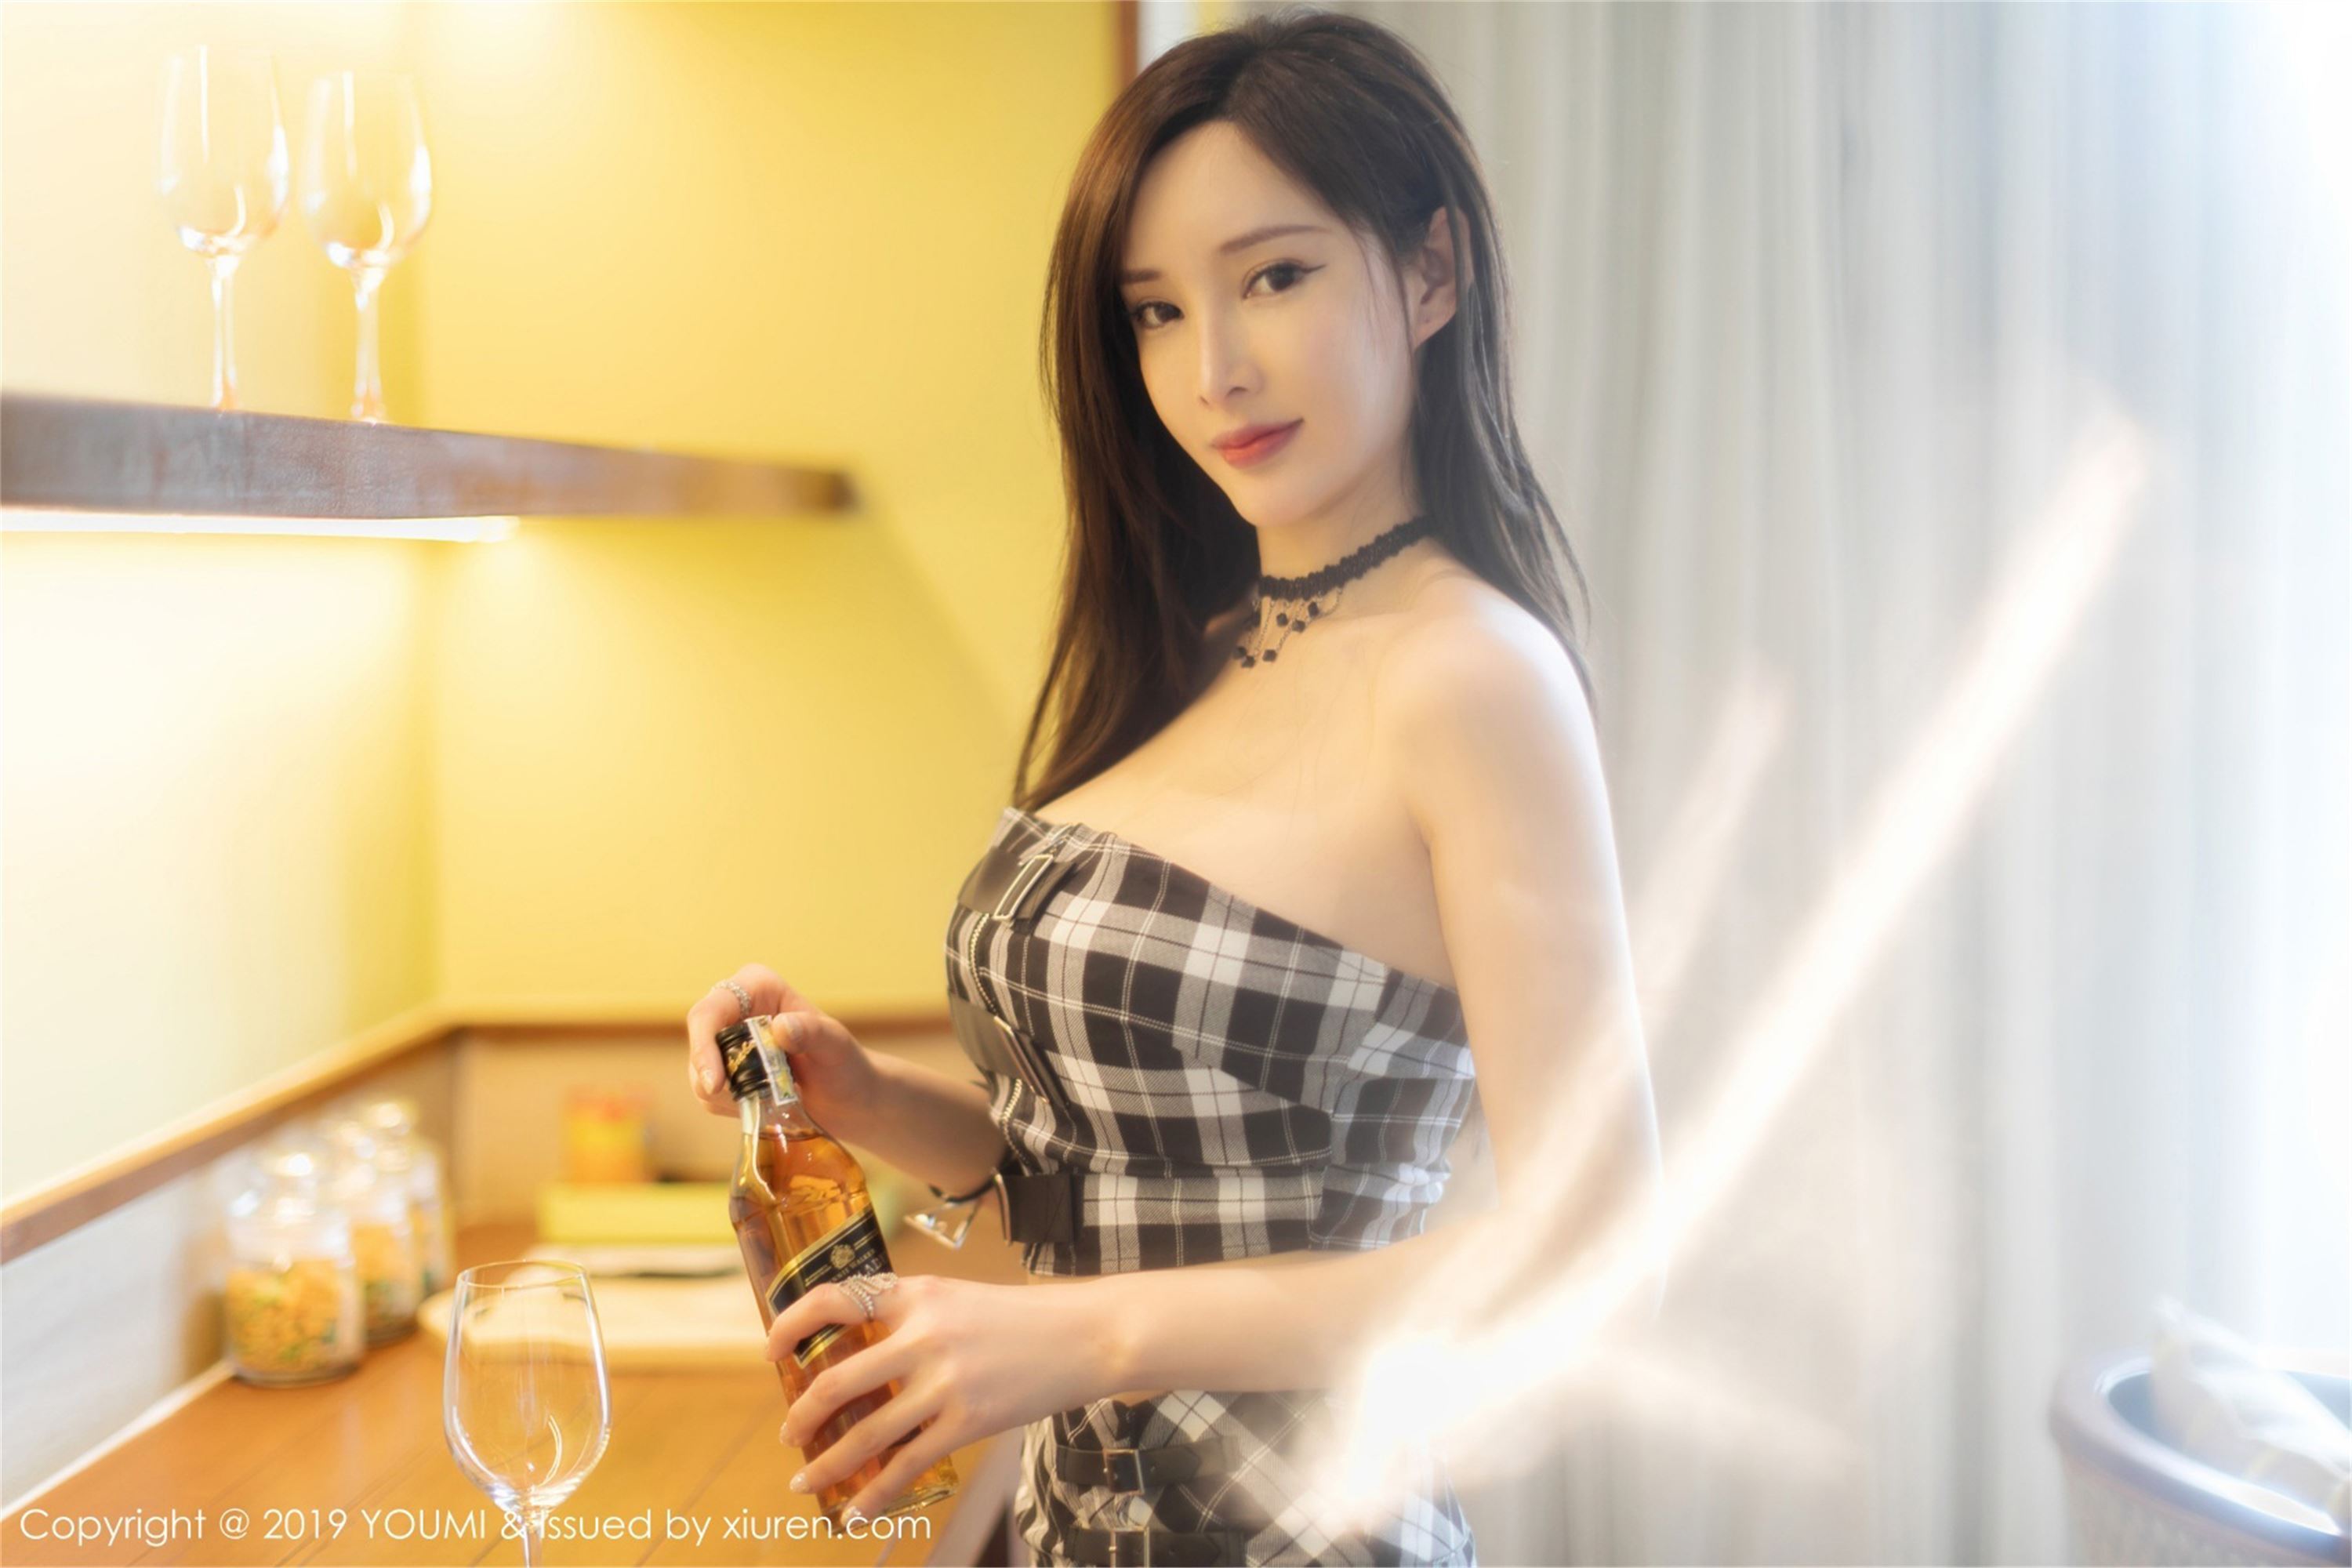 [youmi youmi] June 6, 2019 vol.316 milk bottle